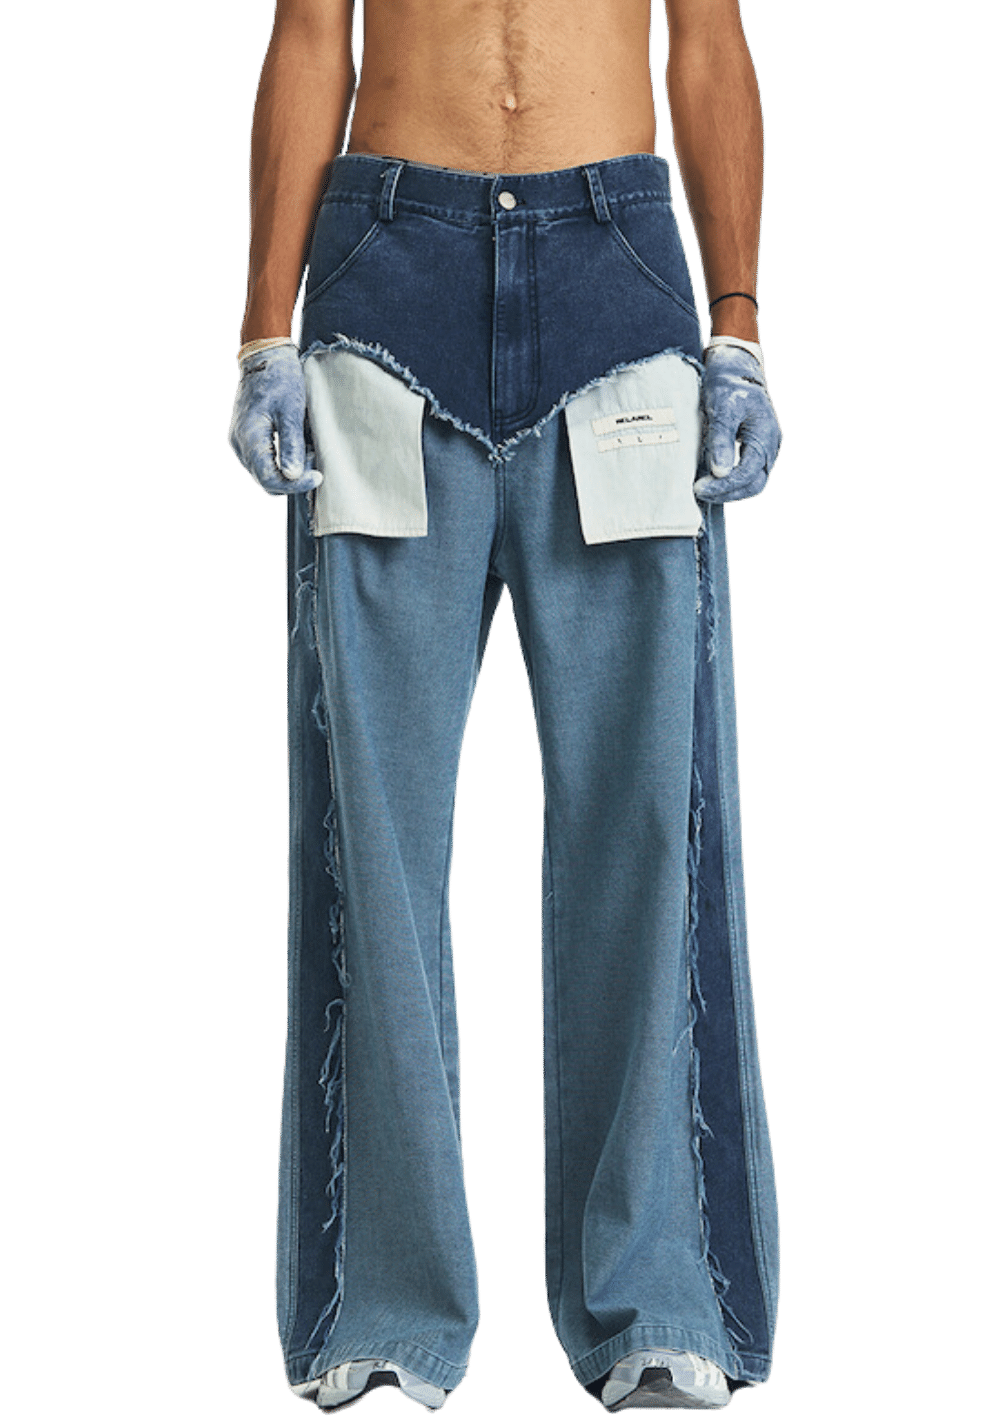 Deconstructed Washed Frayed Edge Jeans - PSYLOS 1, Deconstructed Washed Frayed Edge Jeans, Pants, RELABEL, PSYLOS 1